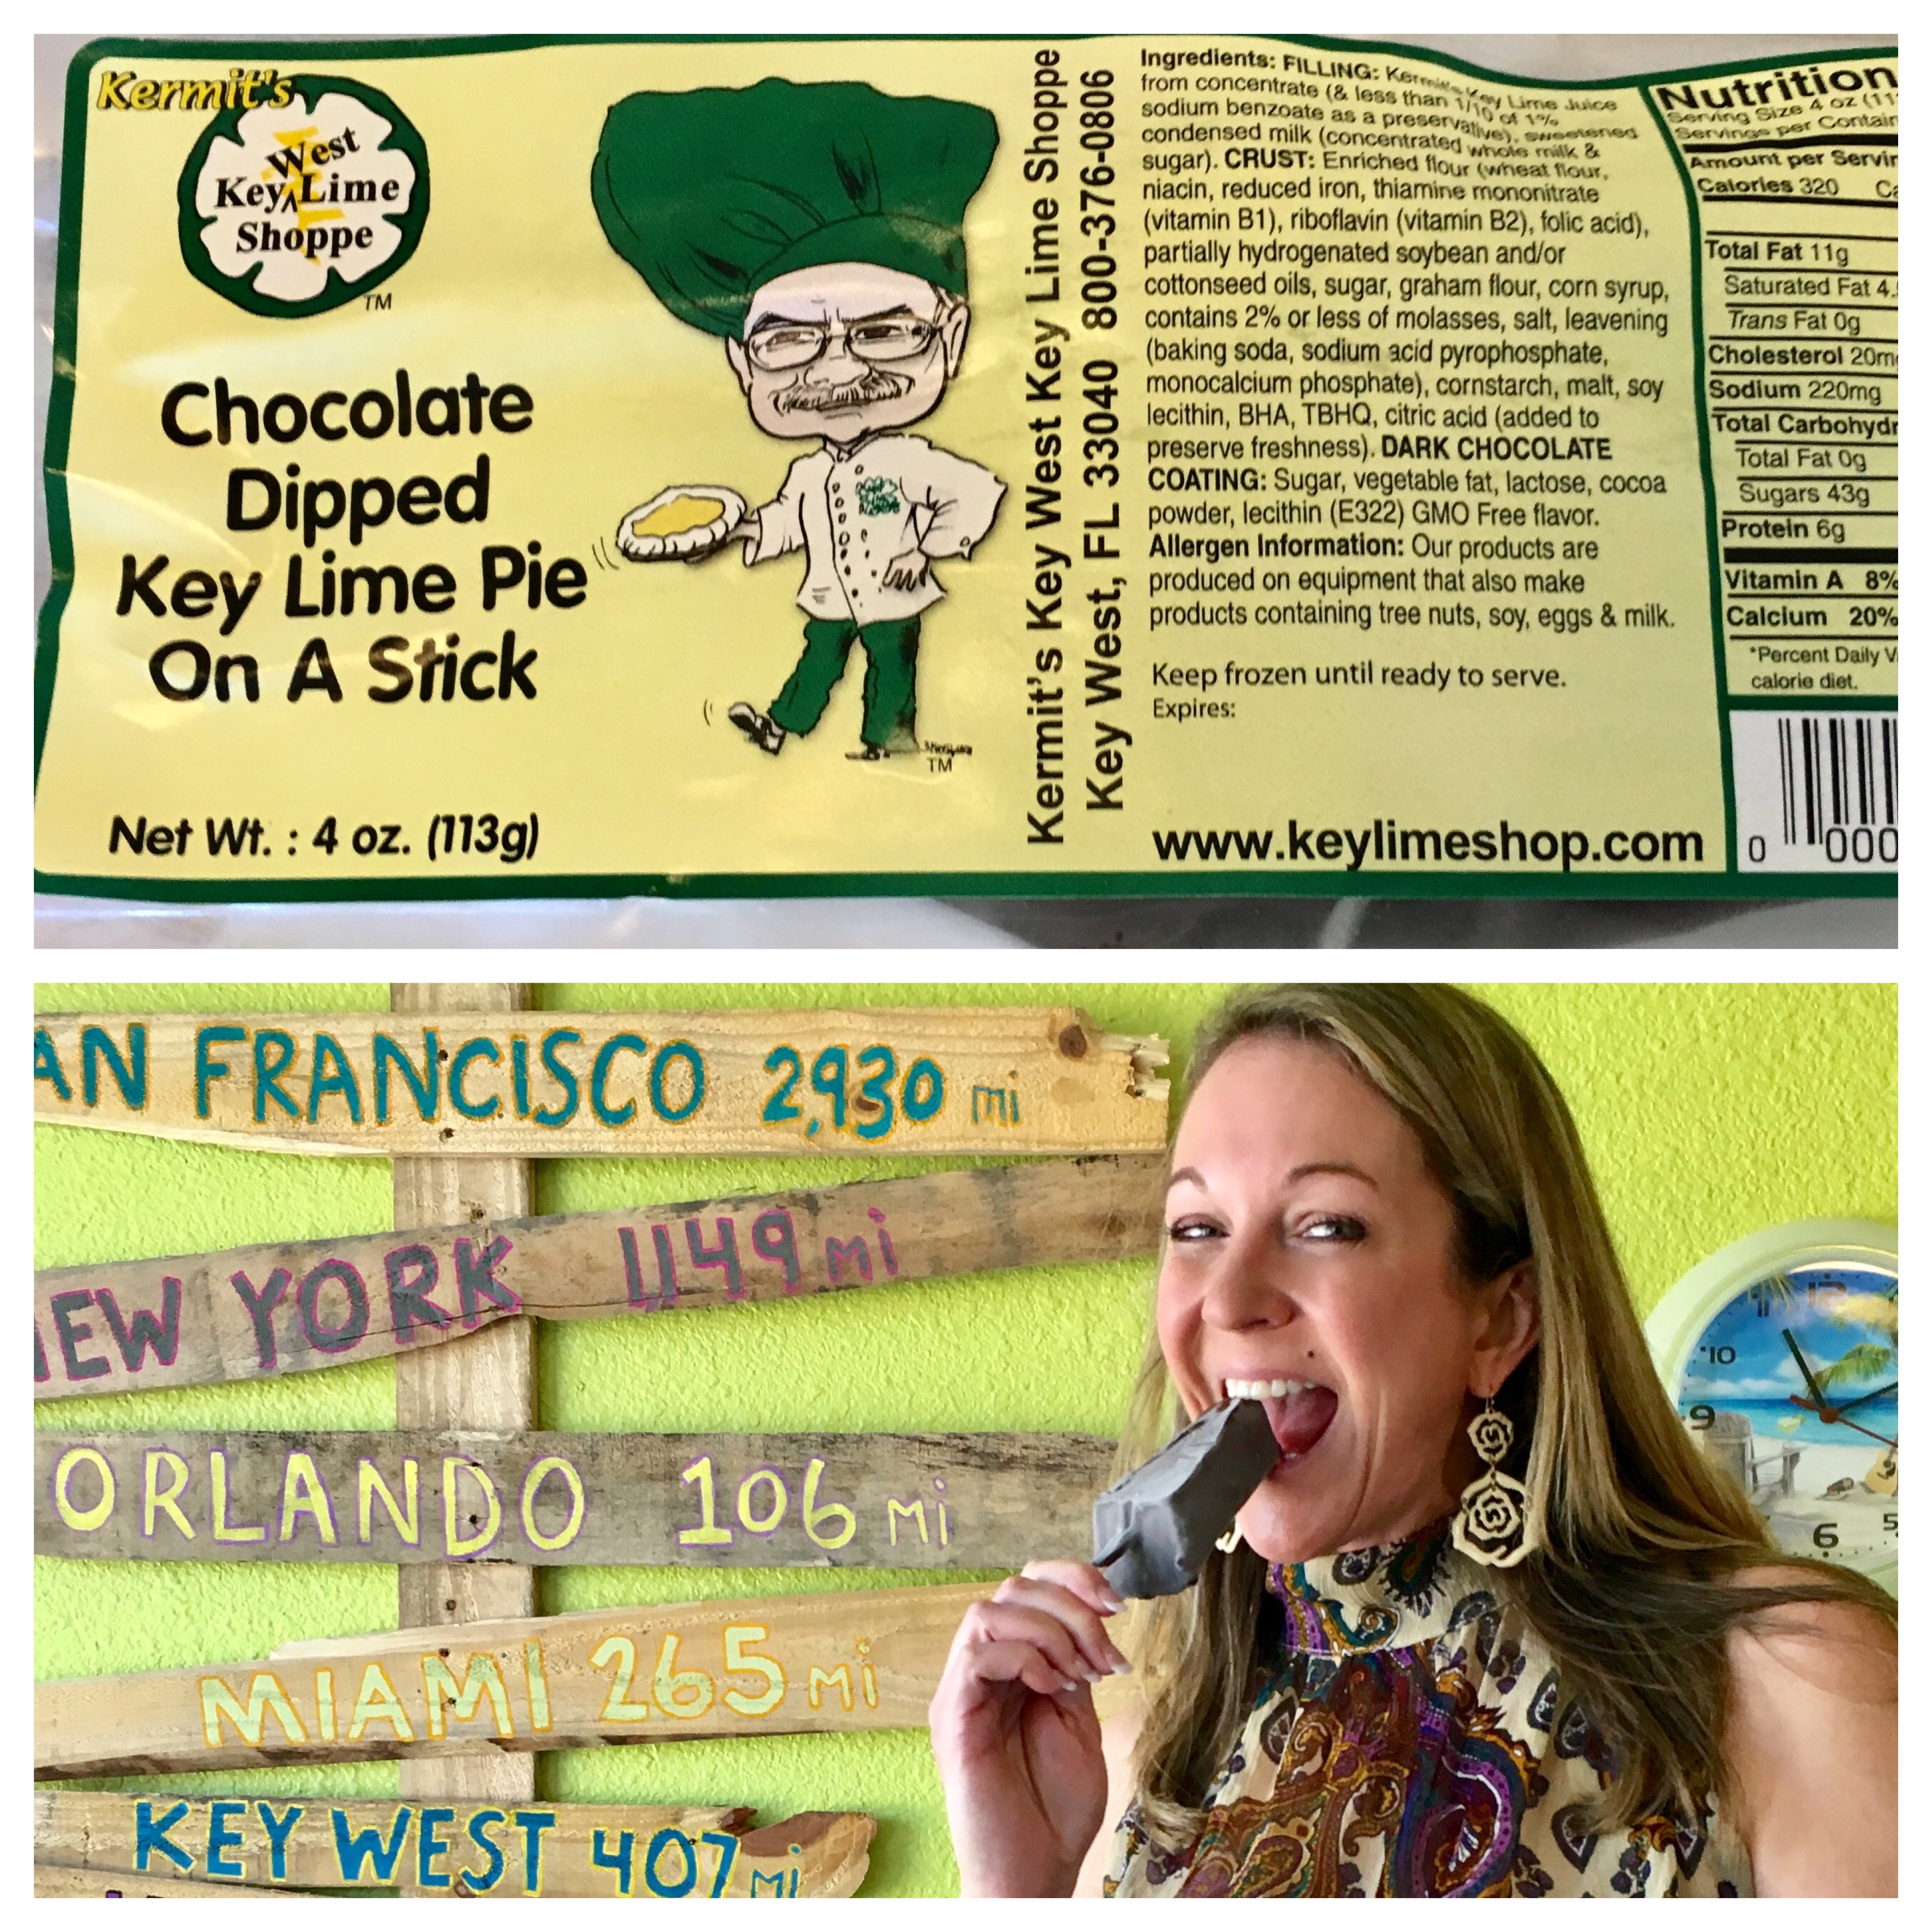 Sugar Shack has Kermitt's Chocolate Dipped Key Lime Pie on a Stick